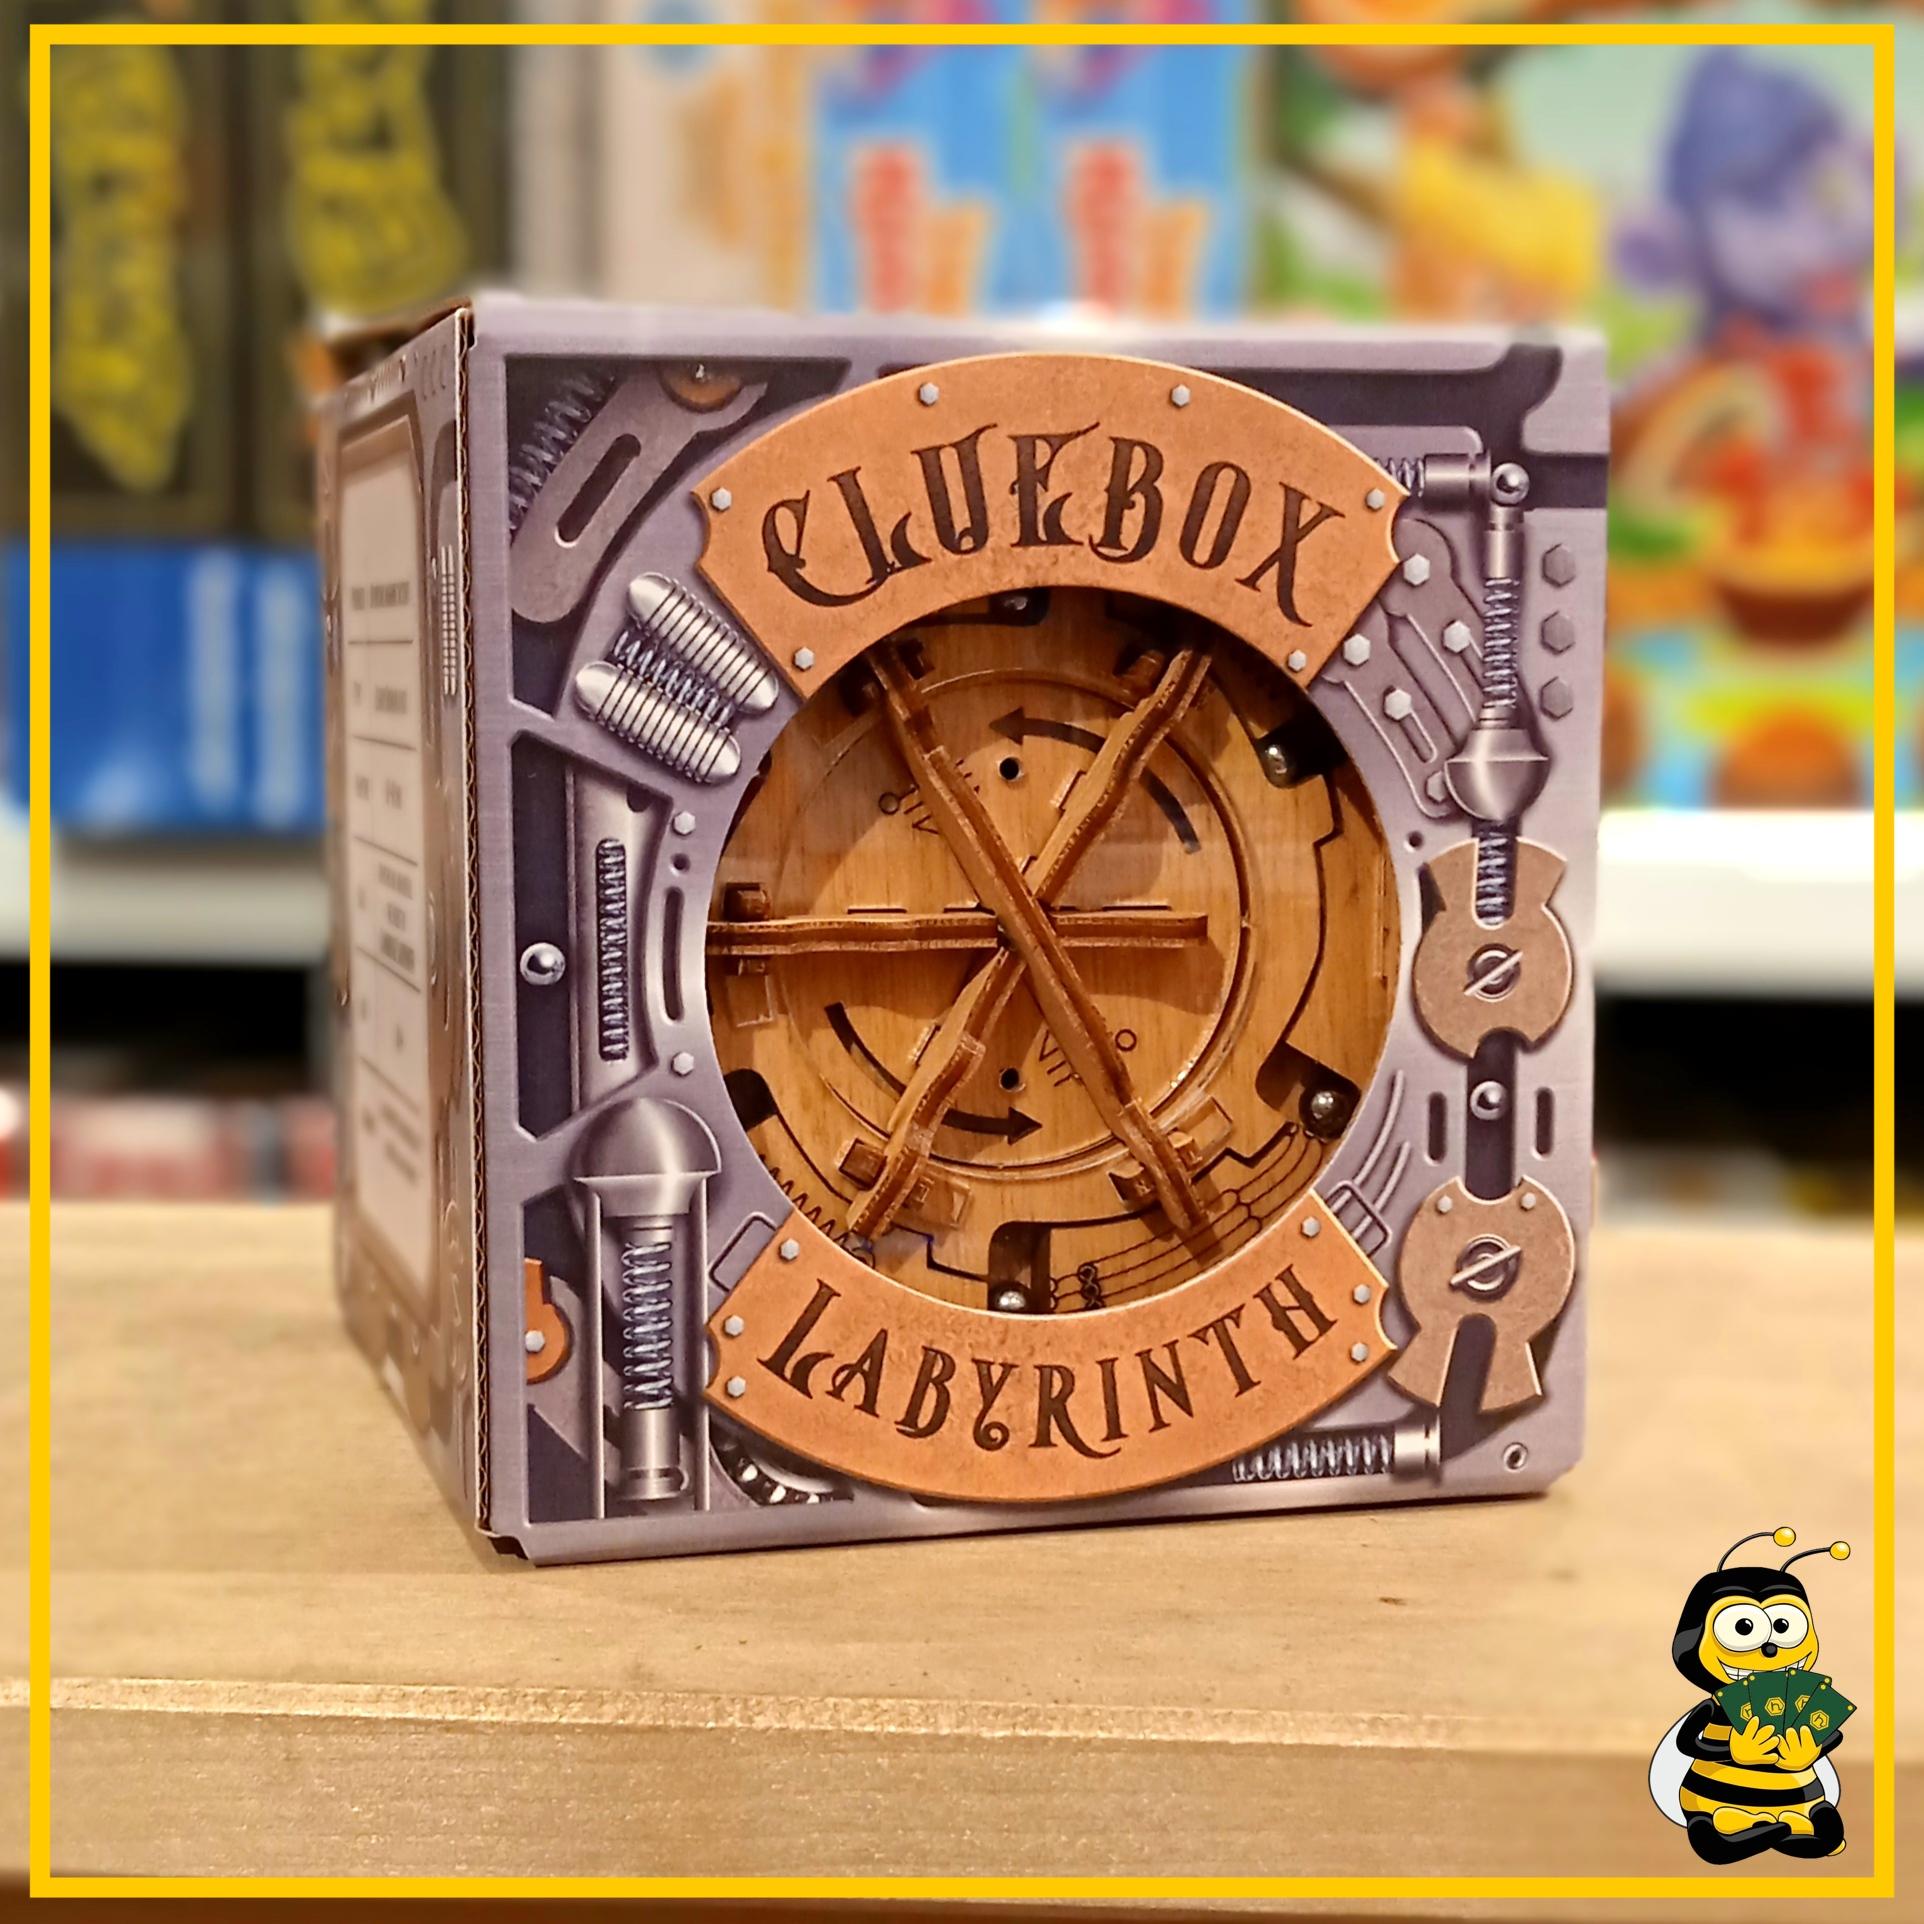 Cluebox - Escape Room in einer Box: Cambridge Labyrinth